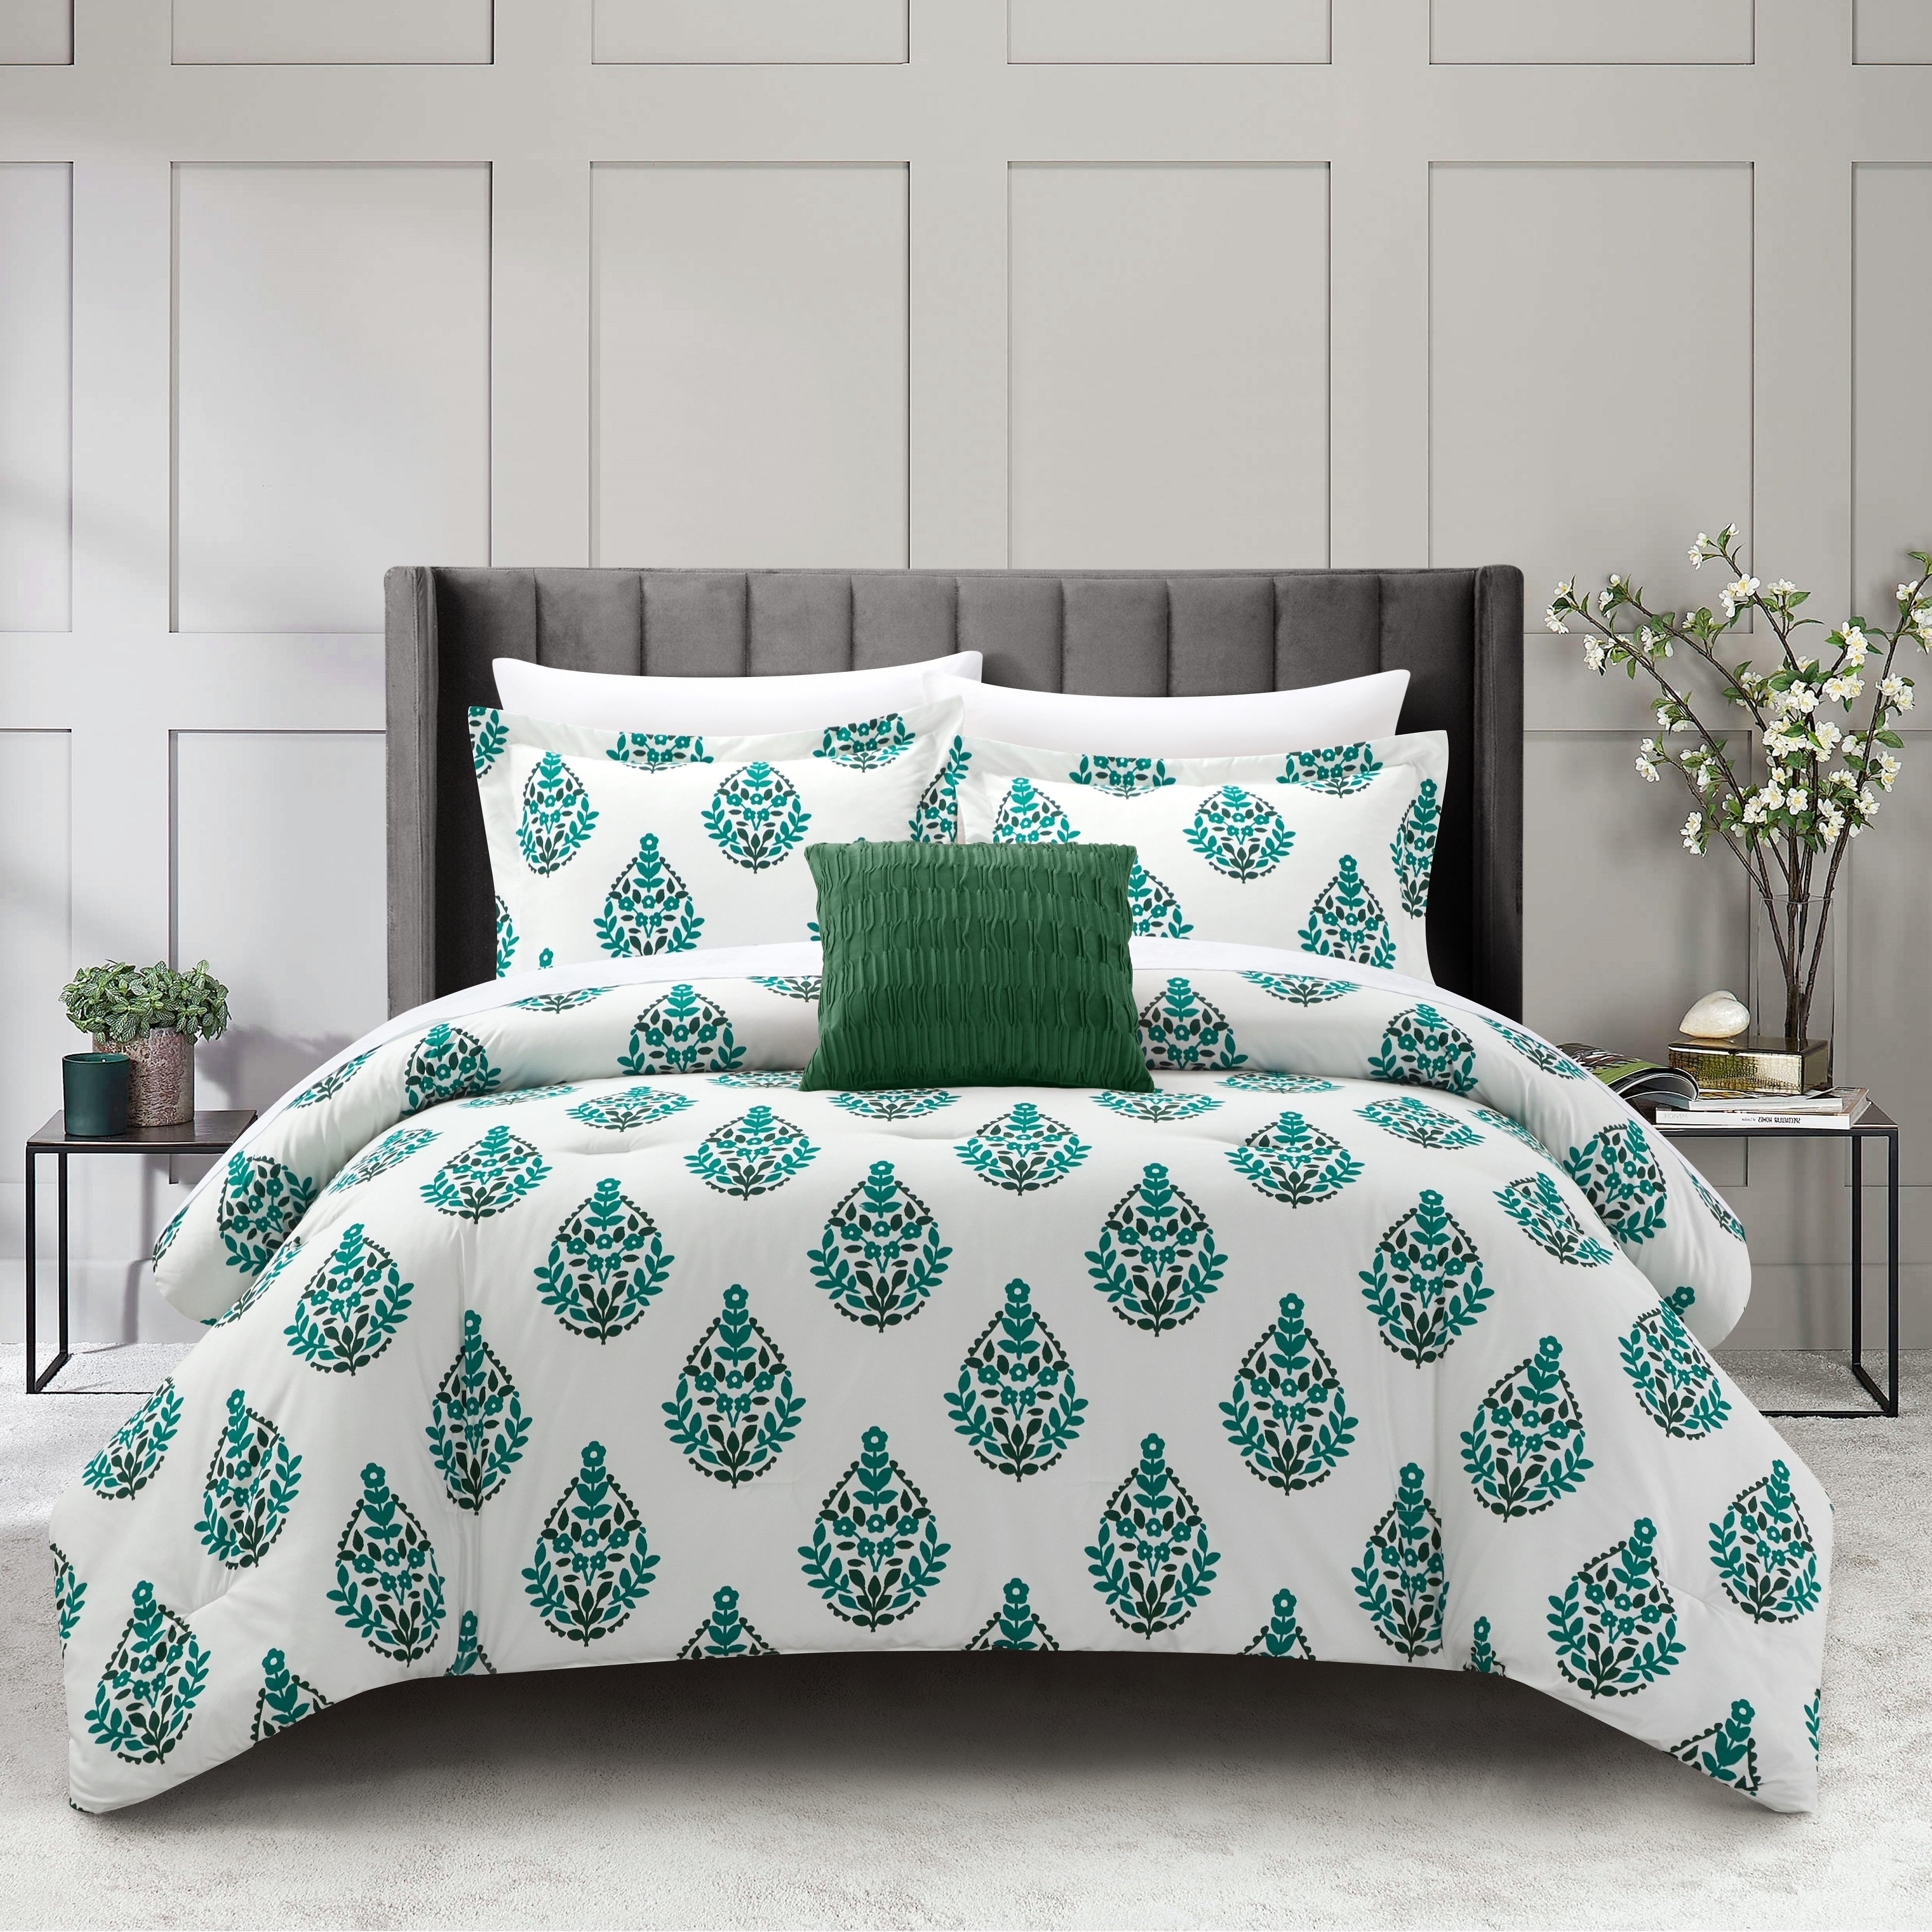 Clairessa 4 Or 3 Piece Comforter Set Floral Medallion Print Design Bedding - Green, Queen - 4 Piece